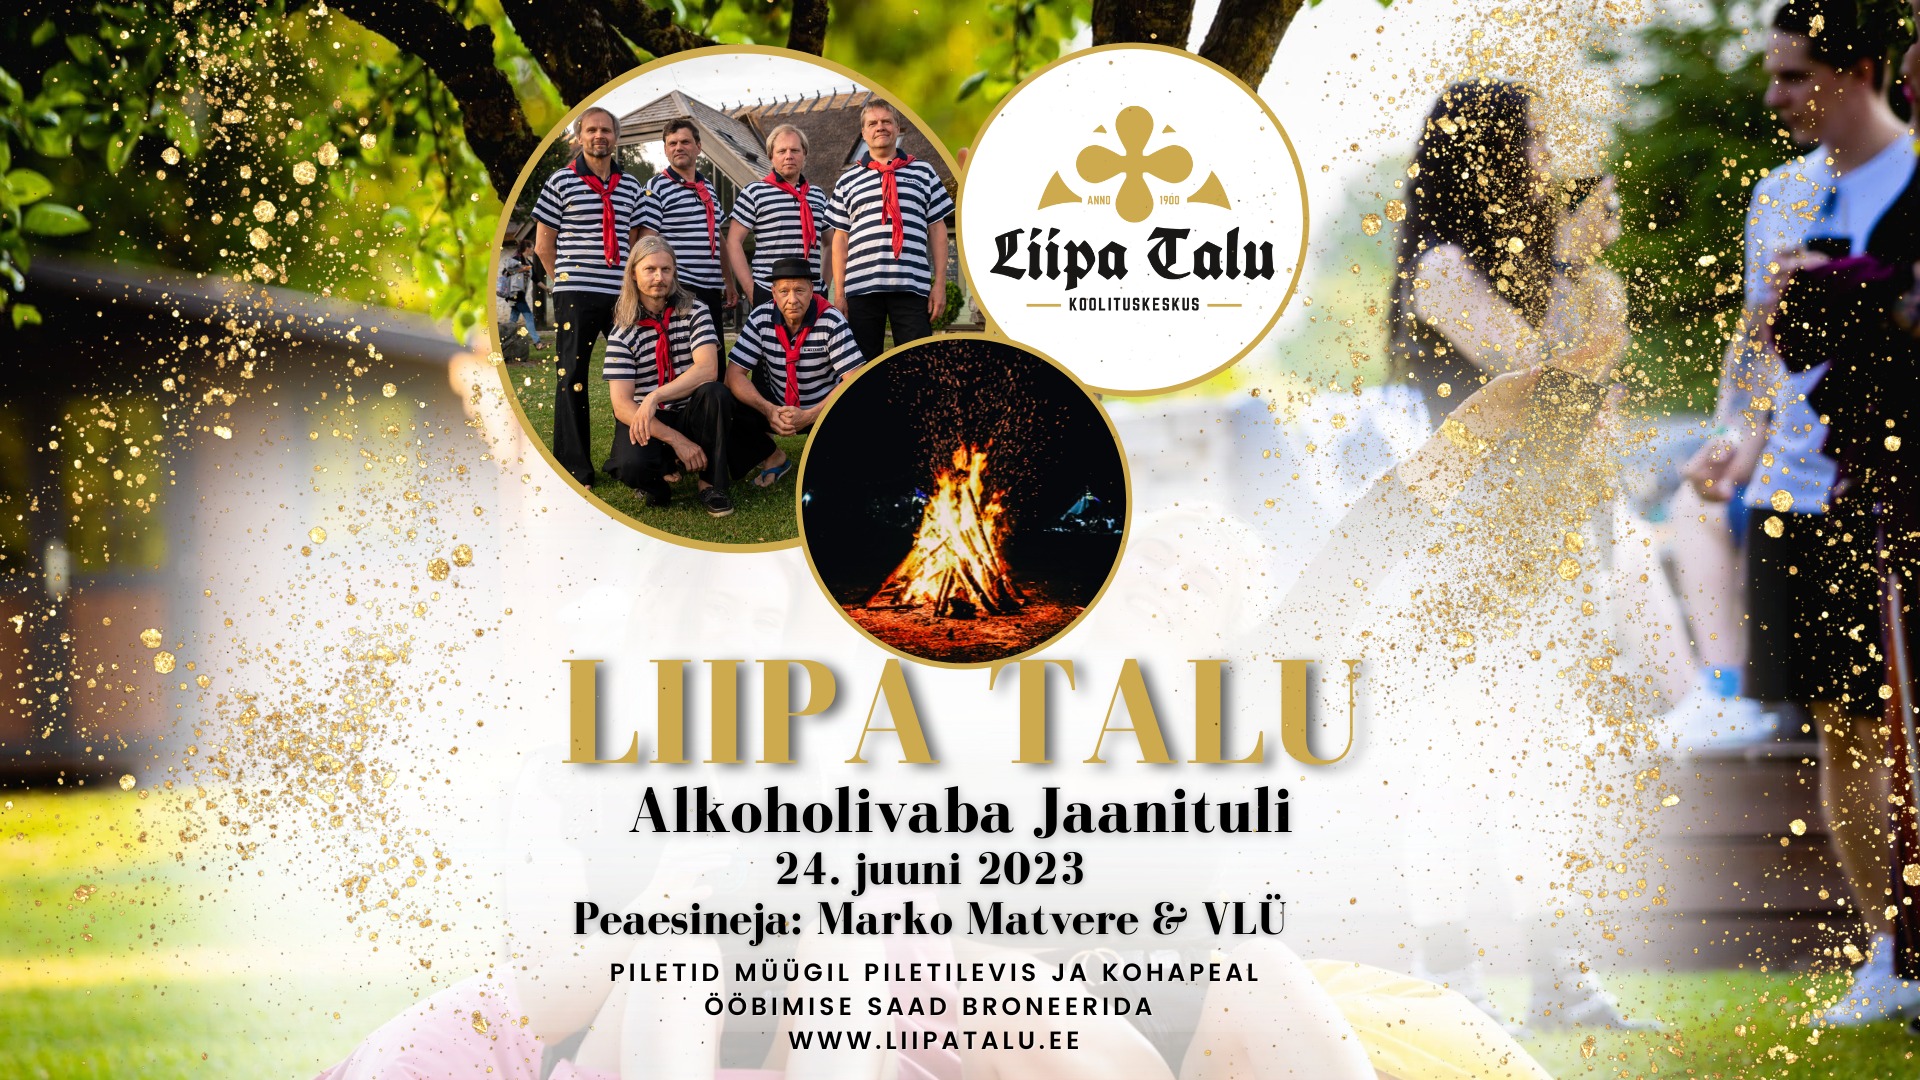 Event Liipa Talu Alkoholivaba Jaanituli 2023 illustratsioon